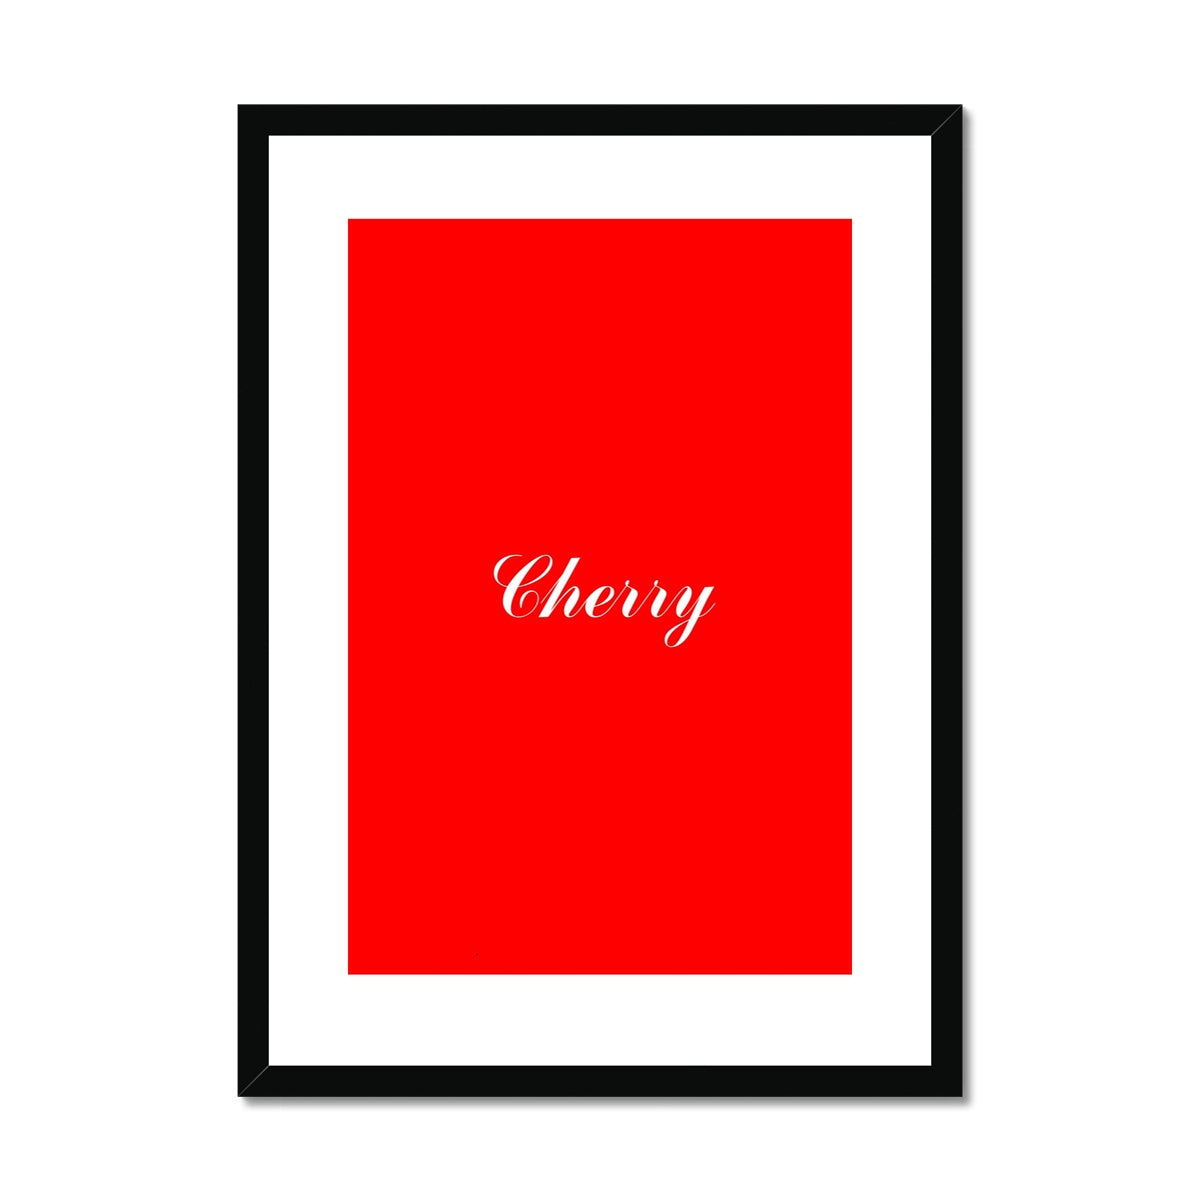 cherry Framed & Mounted Print